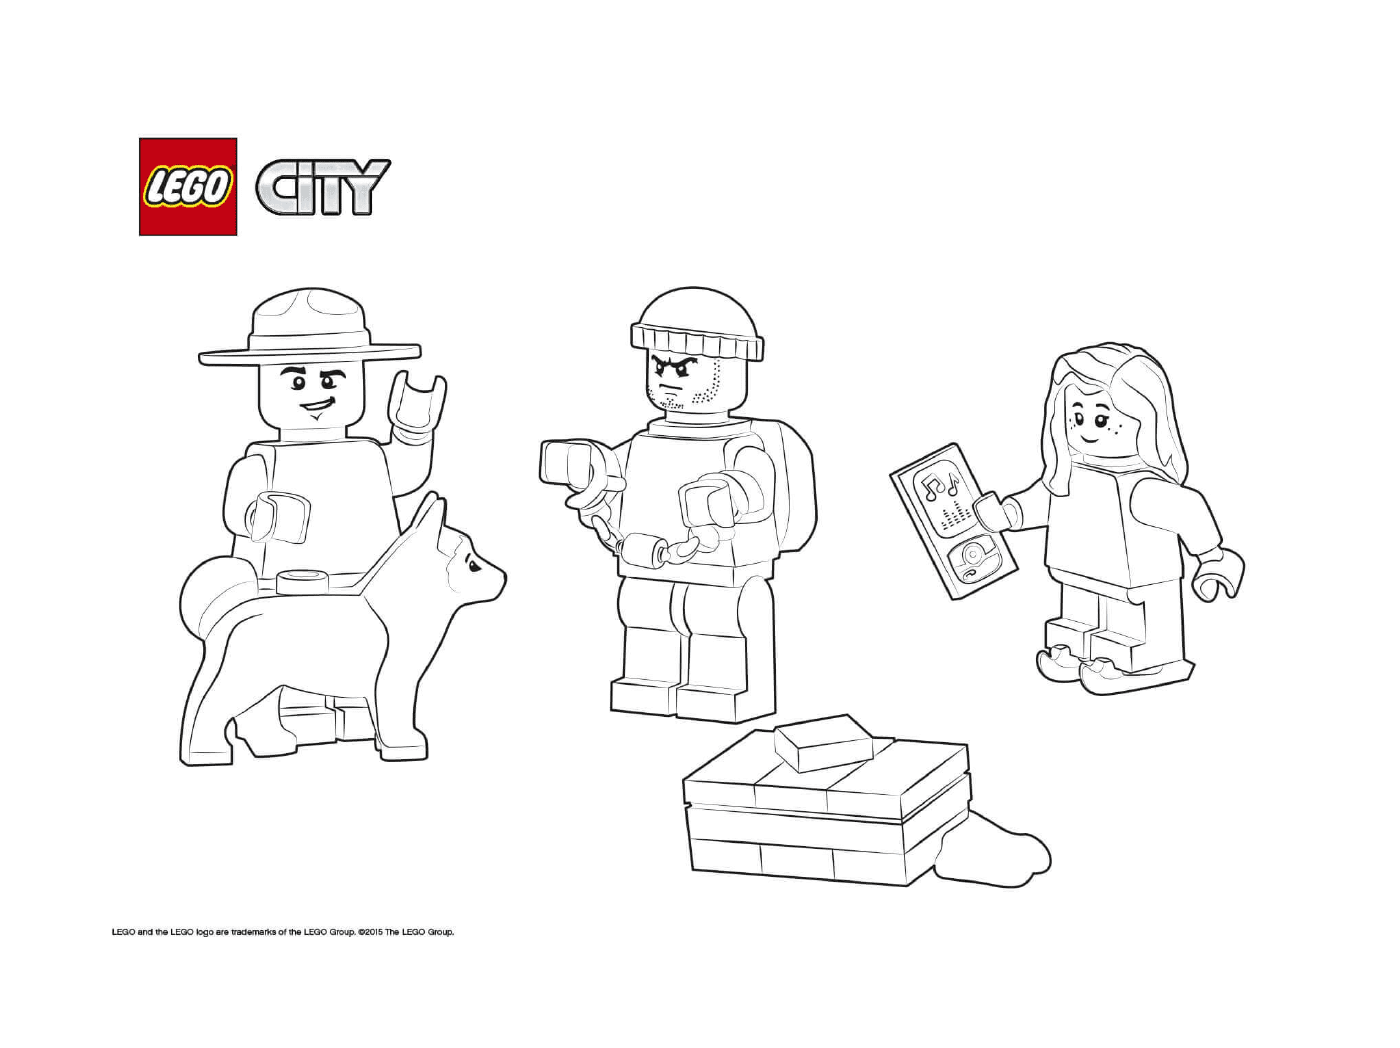  Cherif Lego City and prisoner 